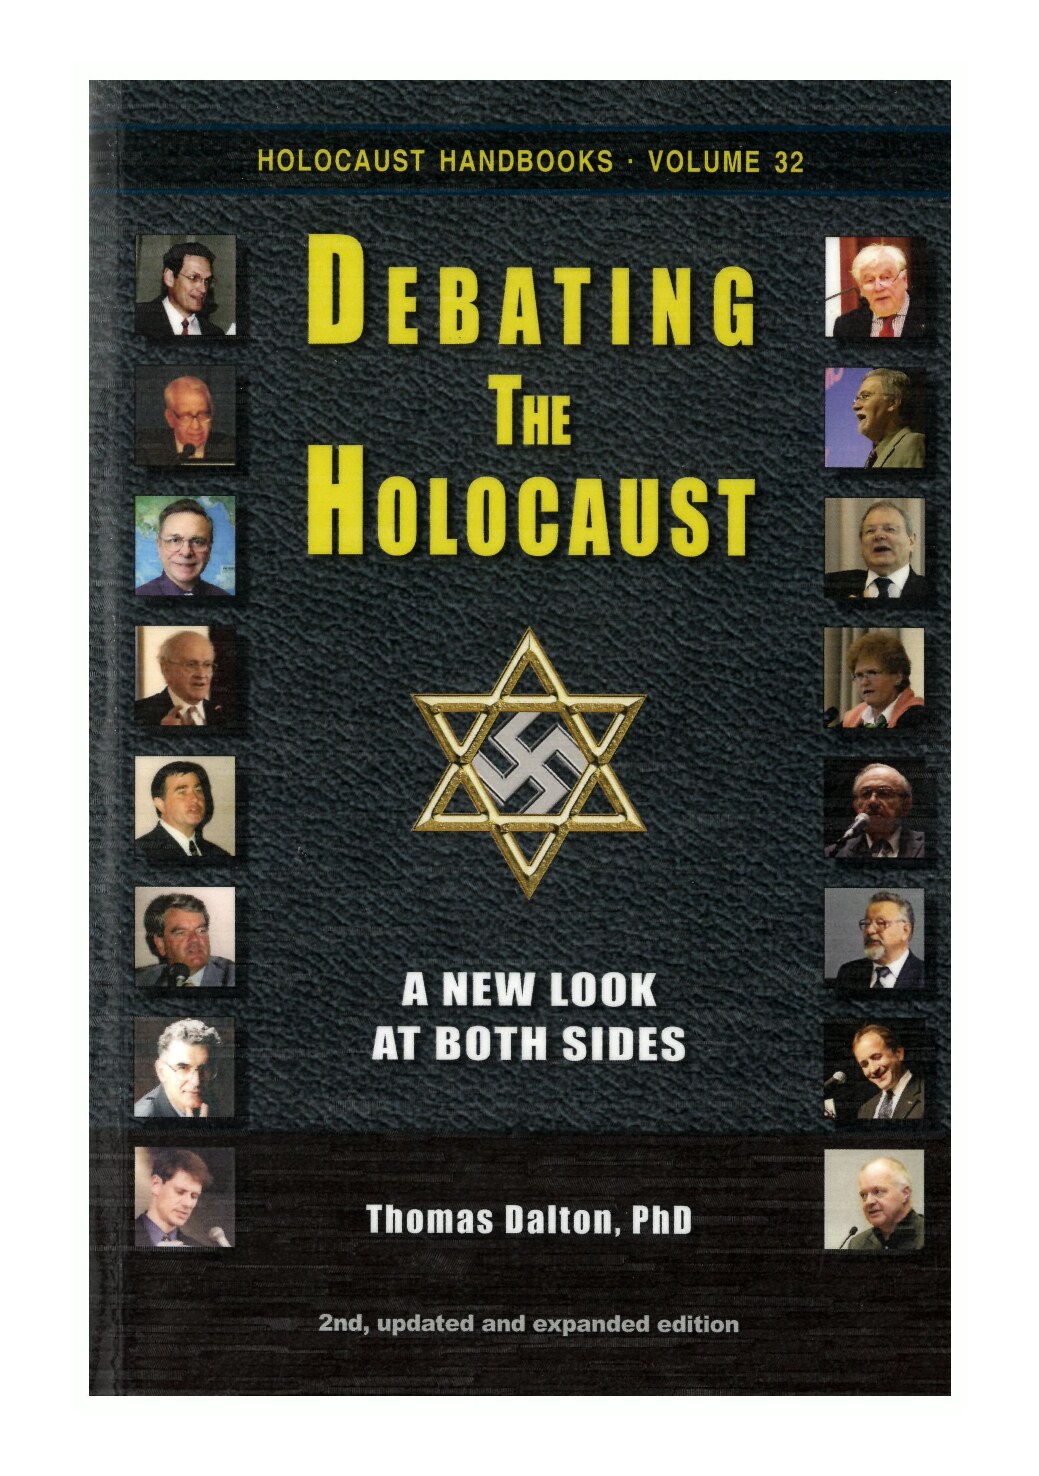 32 - Dalton, Thomas; Debating the Holocaust